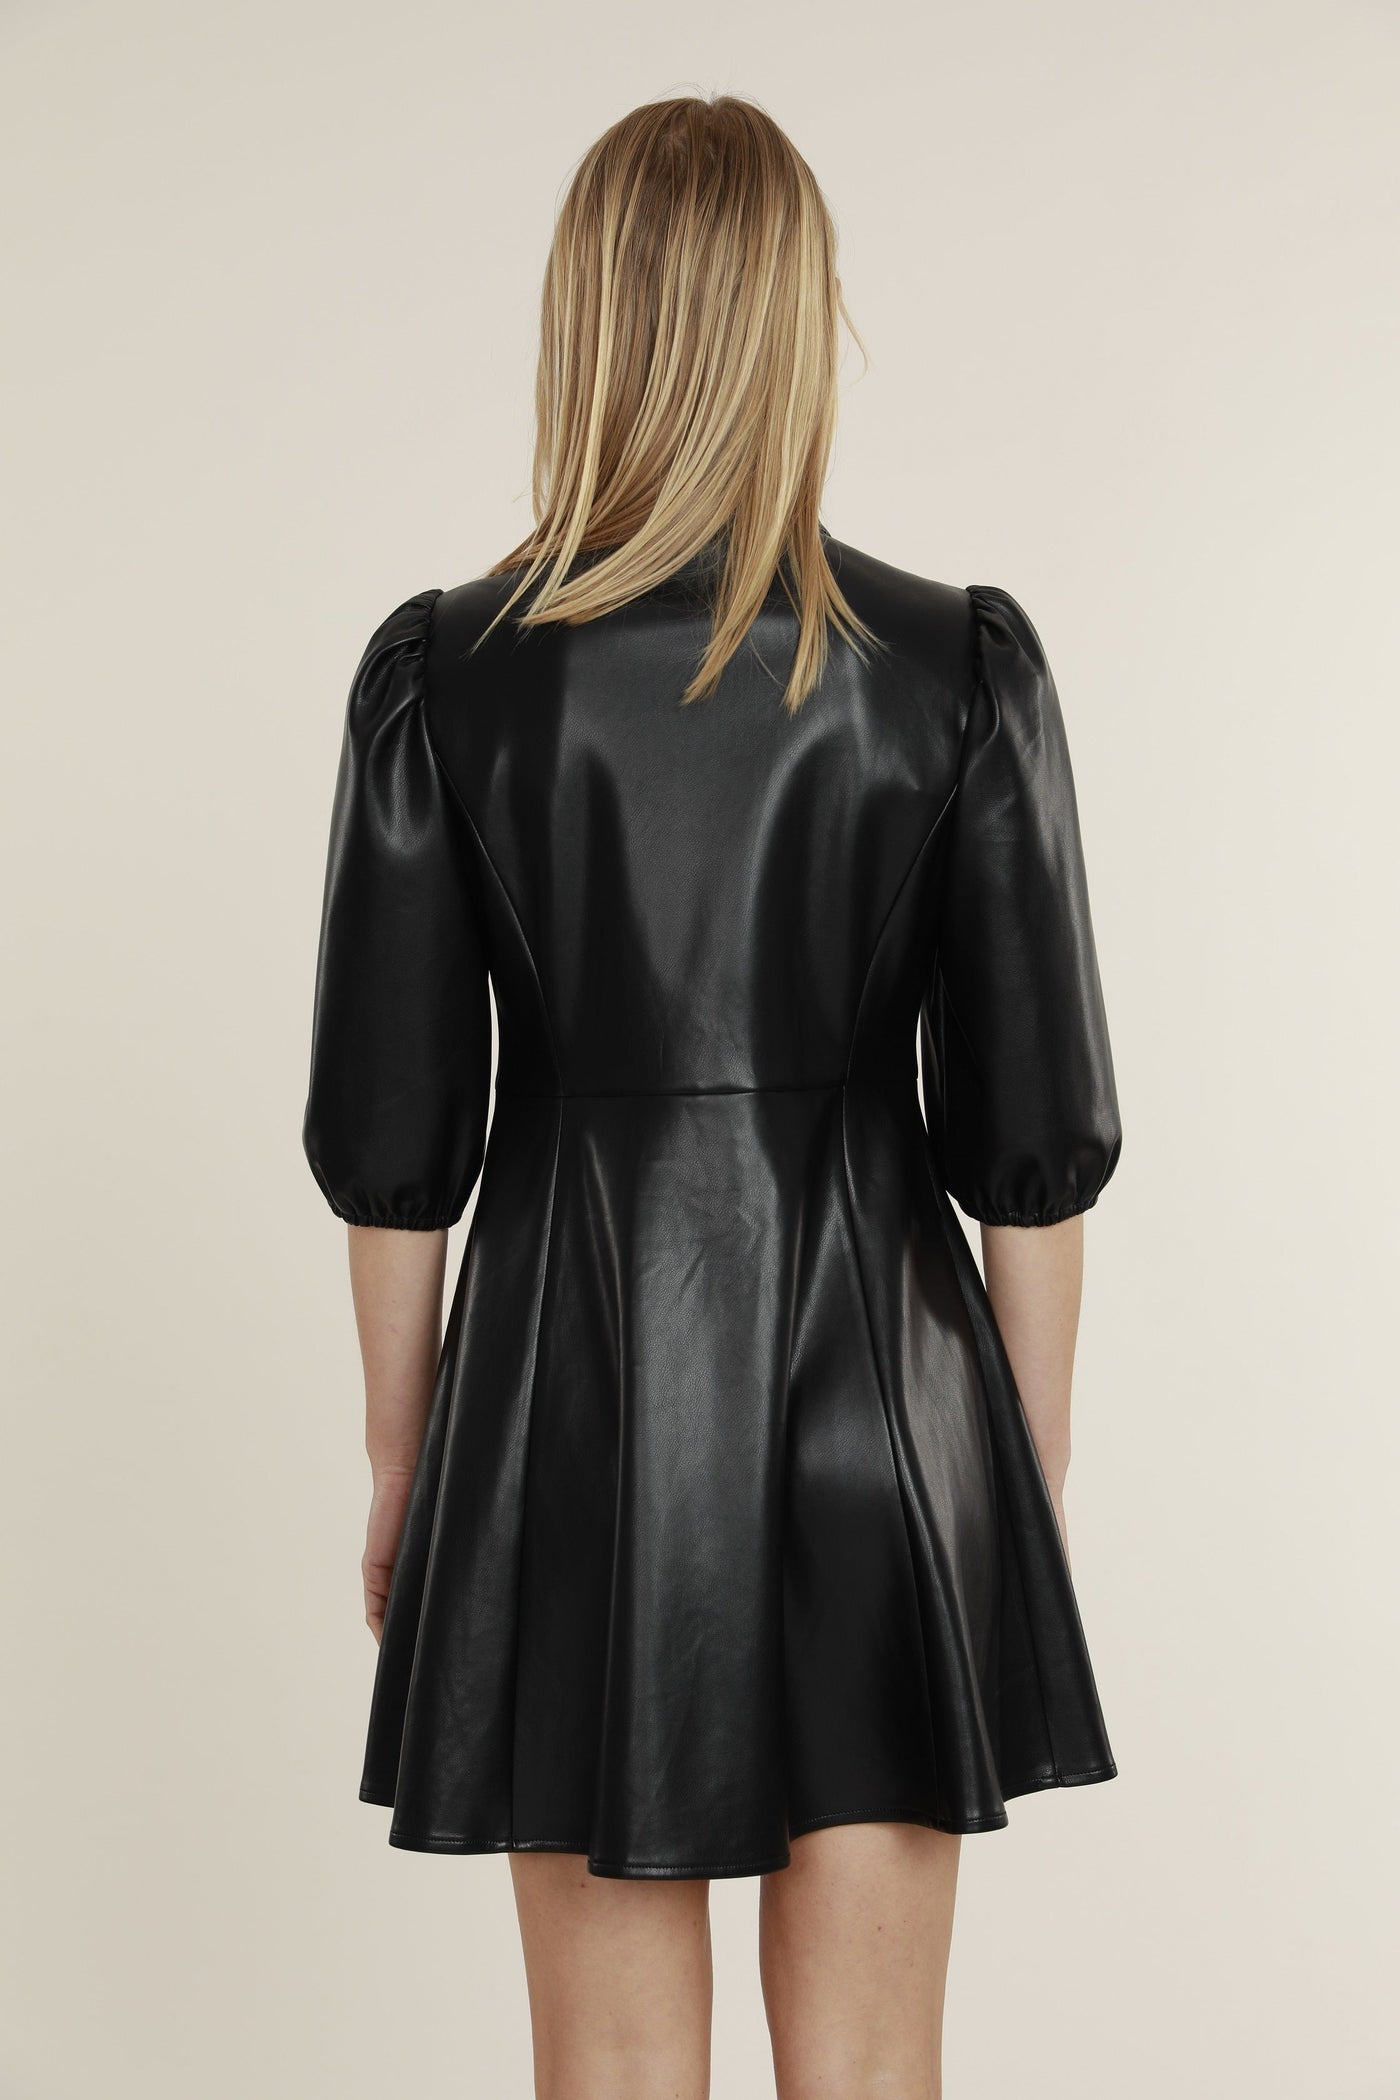 Vegan Leather Seam Detail Dress in Black